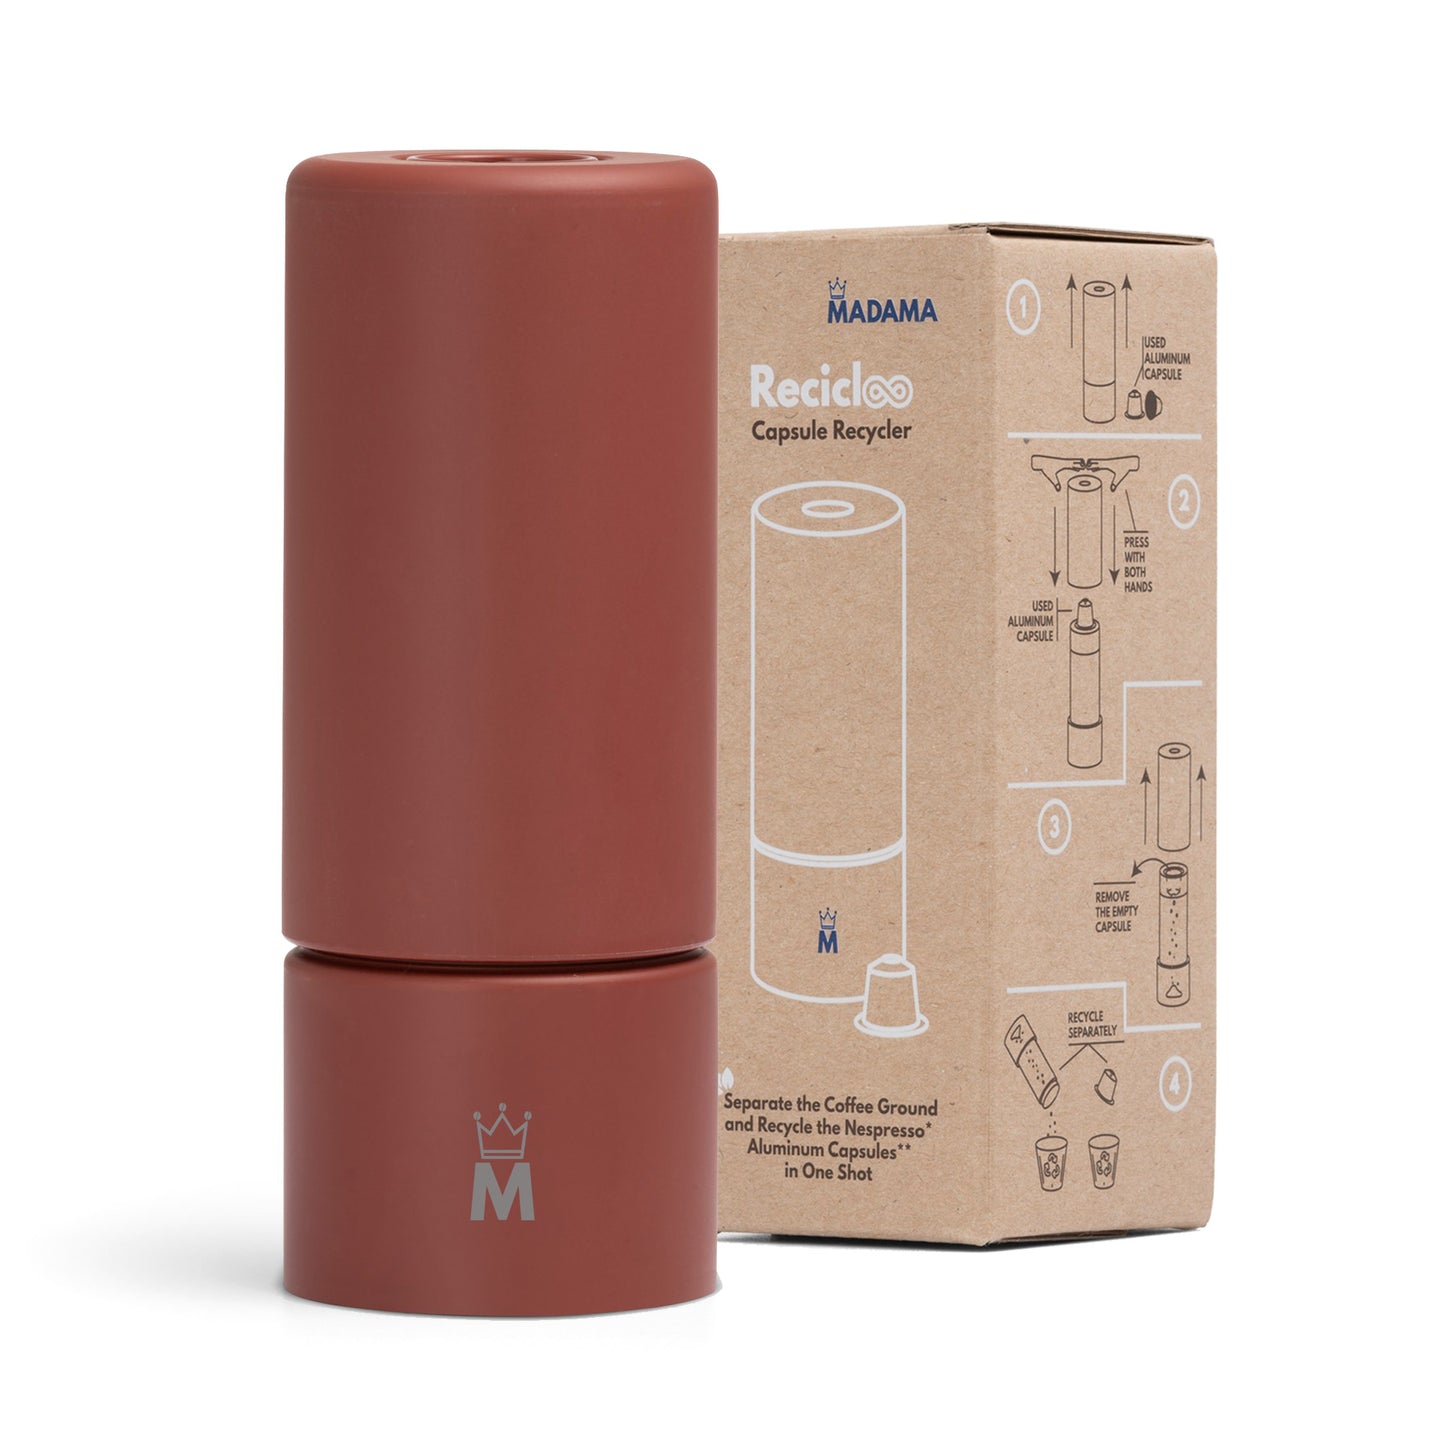 Madama Recicloo - Coffee Capsules Recycling Tool for Aluminum Nespresso Pods. Aluminum Capsule Recycler. Red